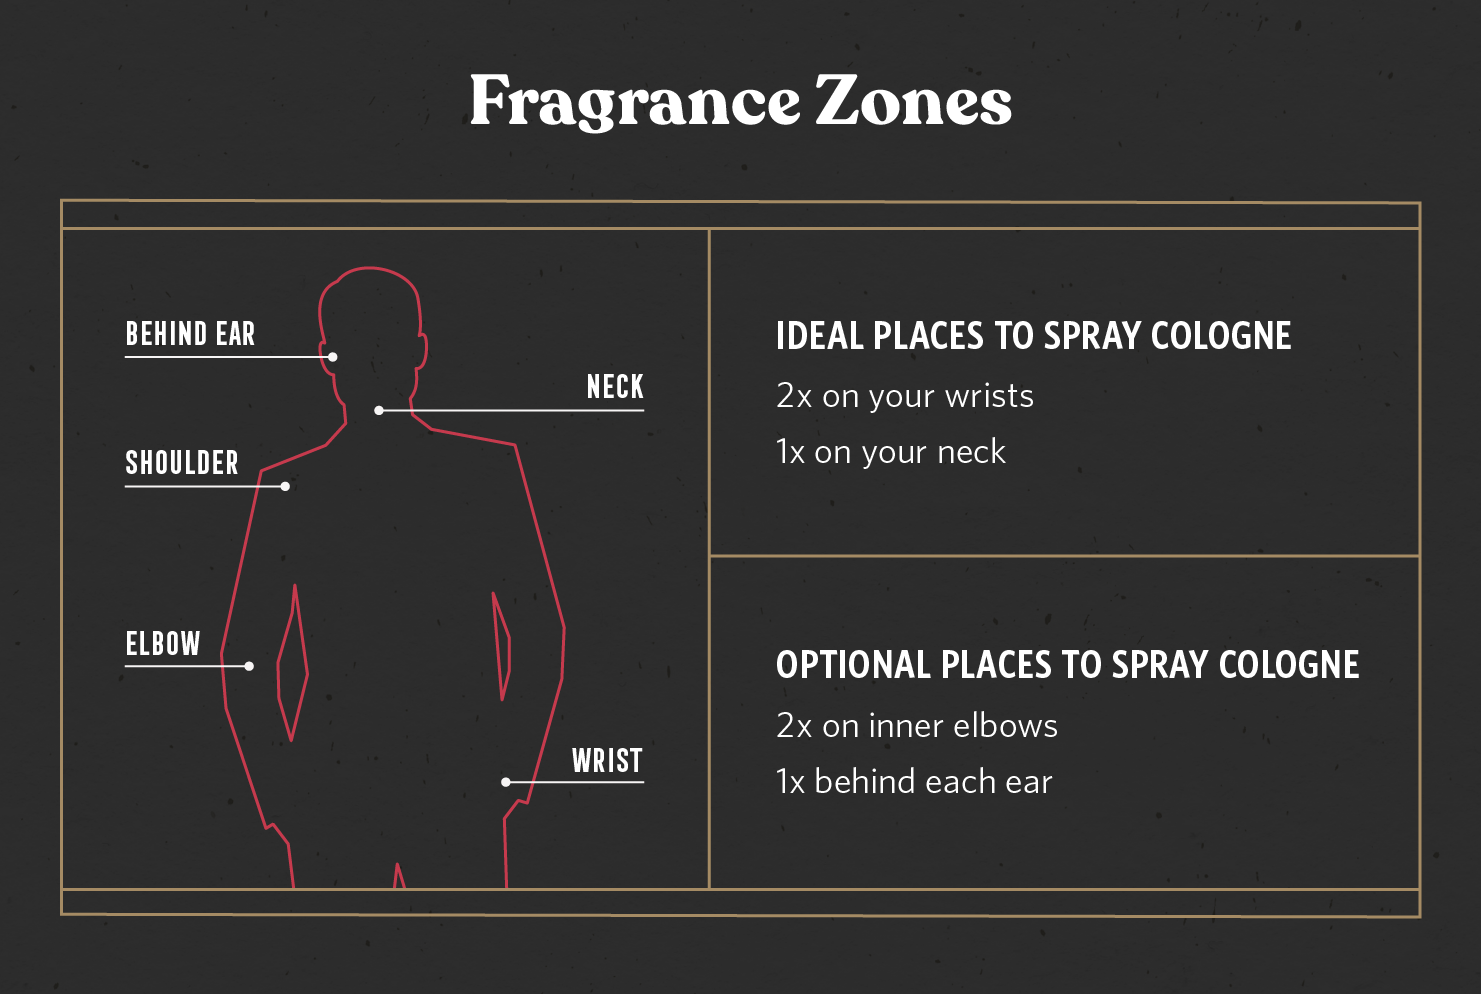 Fragrance zones